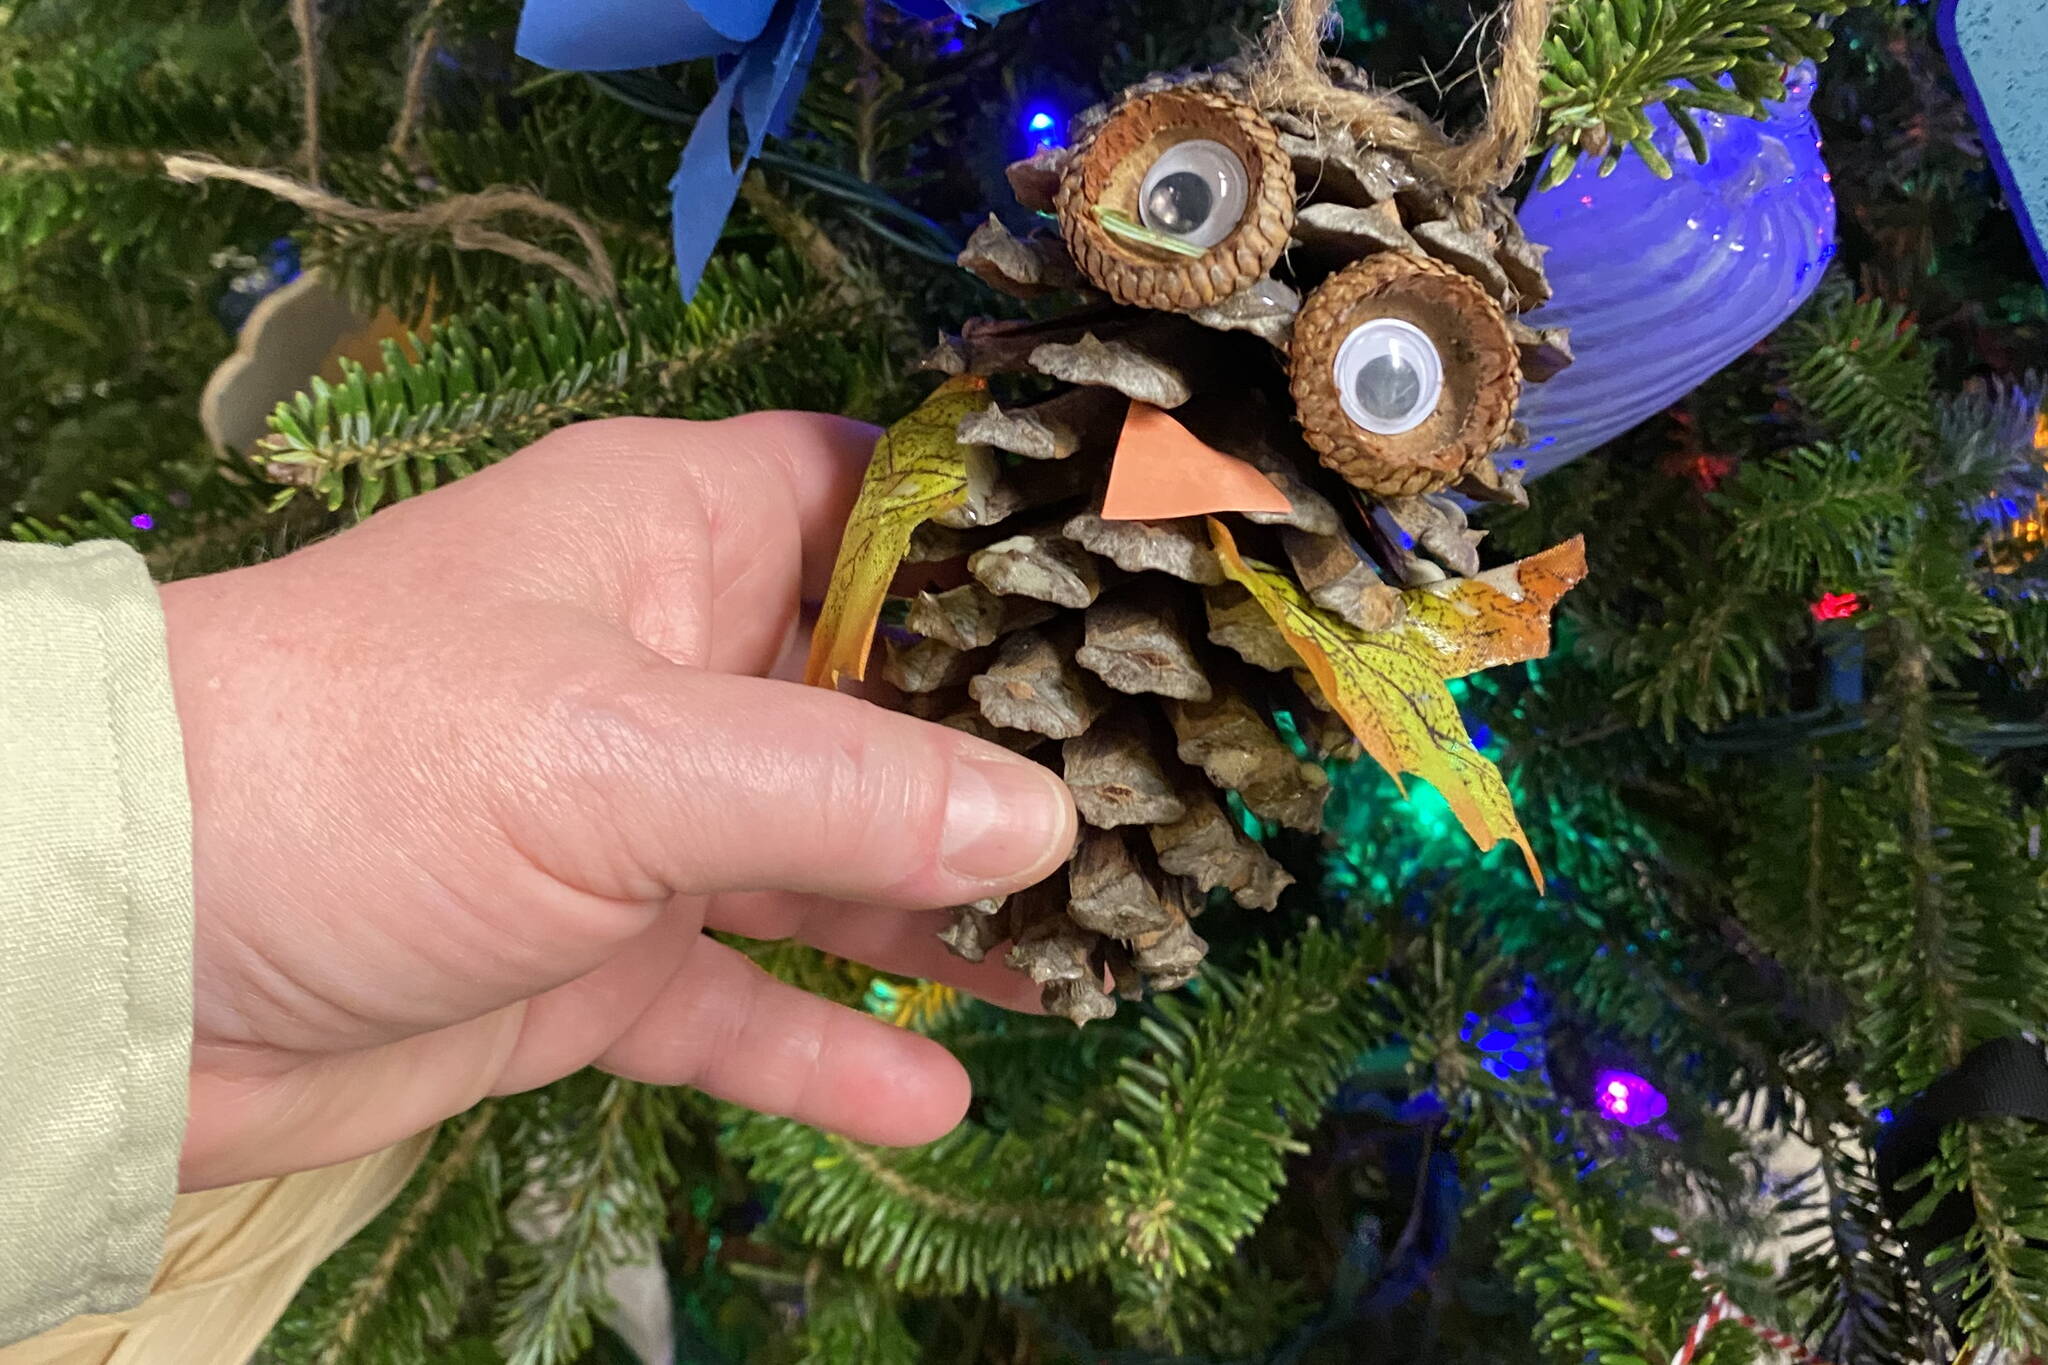 A handmade ornament from a previous U.S. Capitol Christmas Tree. (Photo courtesy of U.S. Capitol Christmas Tree)